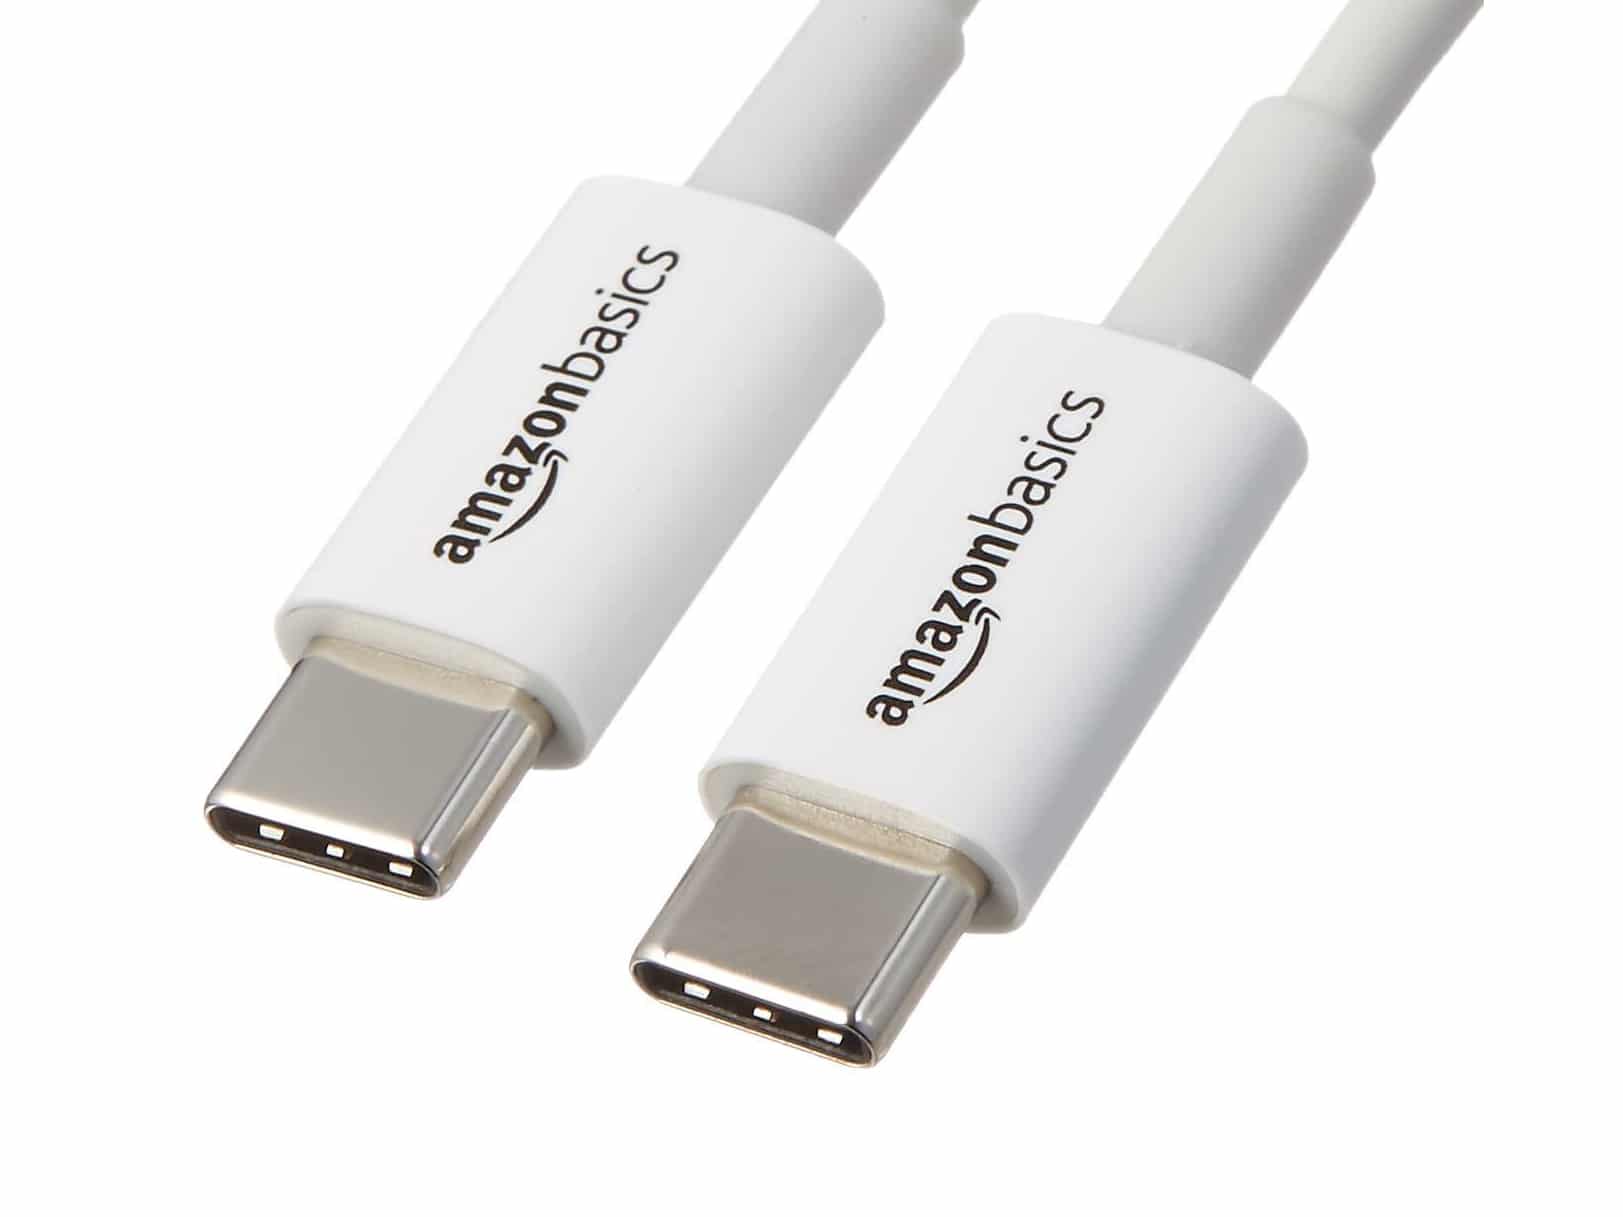 AmazonBasics USB cables